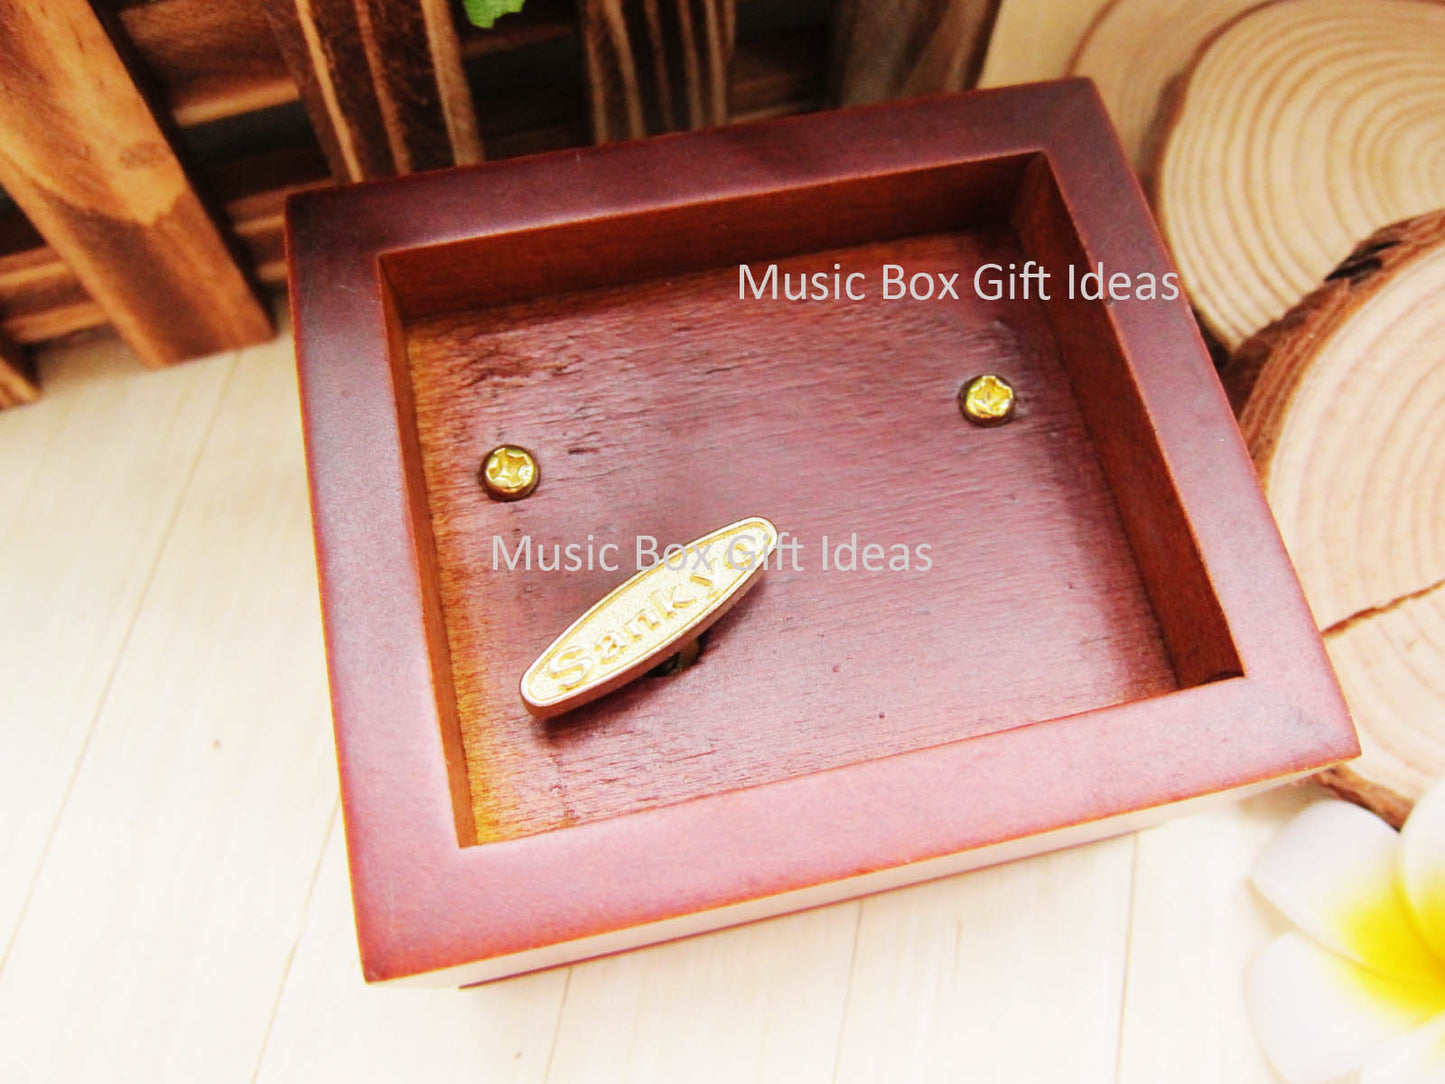 Disney Nutcracker Soundtrack Sugar Plum Fairy 18-Note Music Box Gift (Wooden Clockwork) - Music Box Gift Ideas